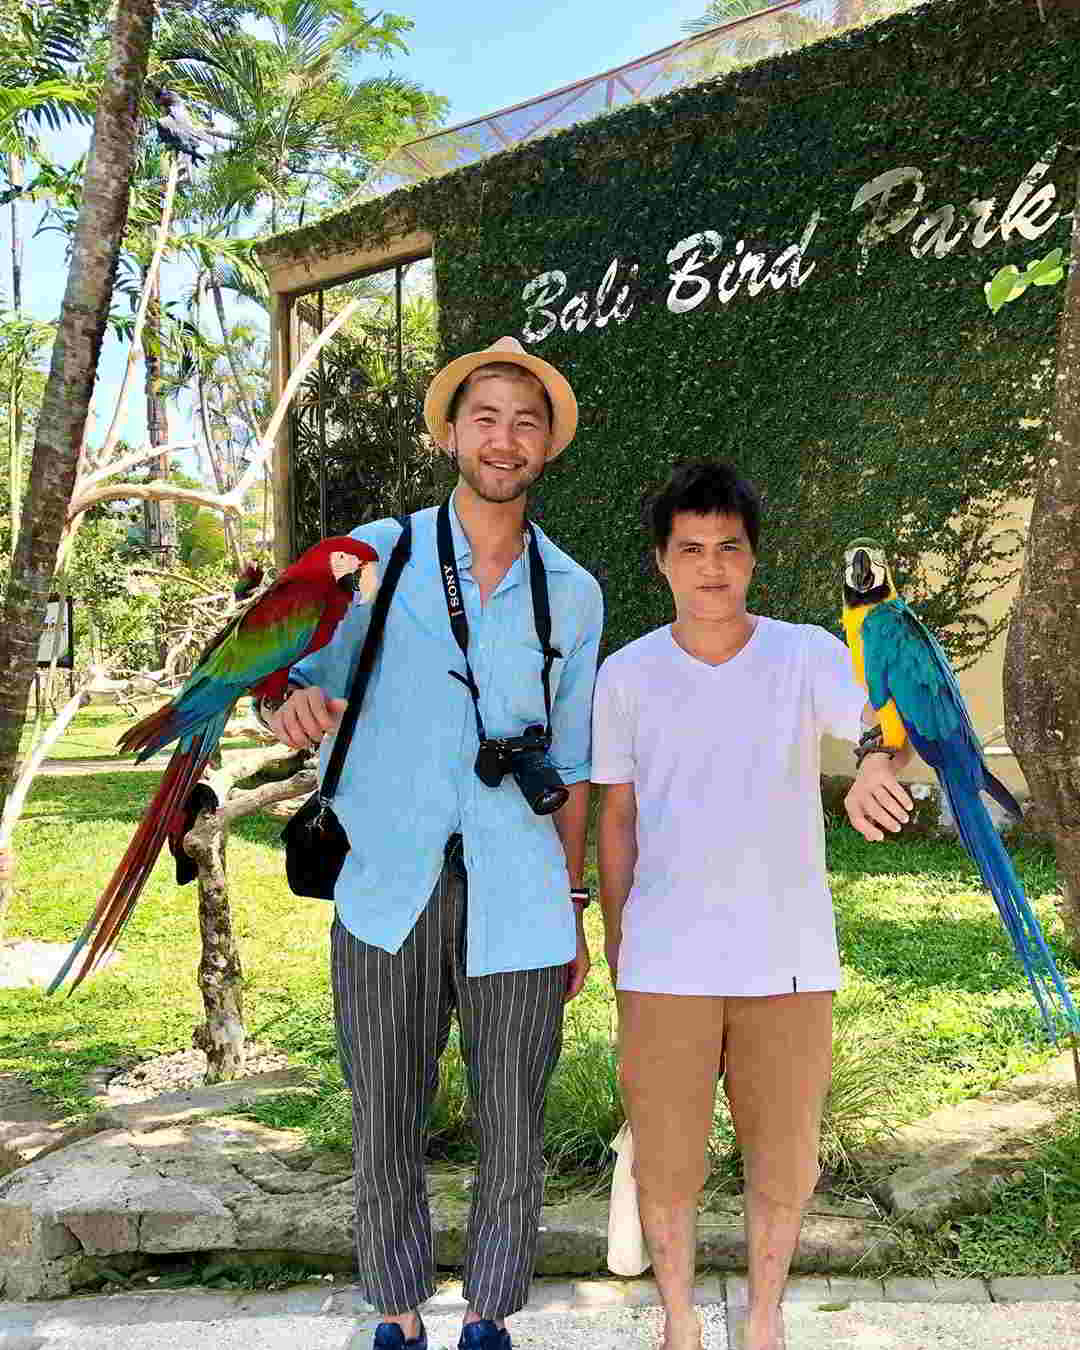 bali-bird-park-review